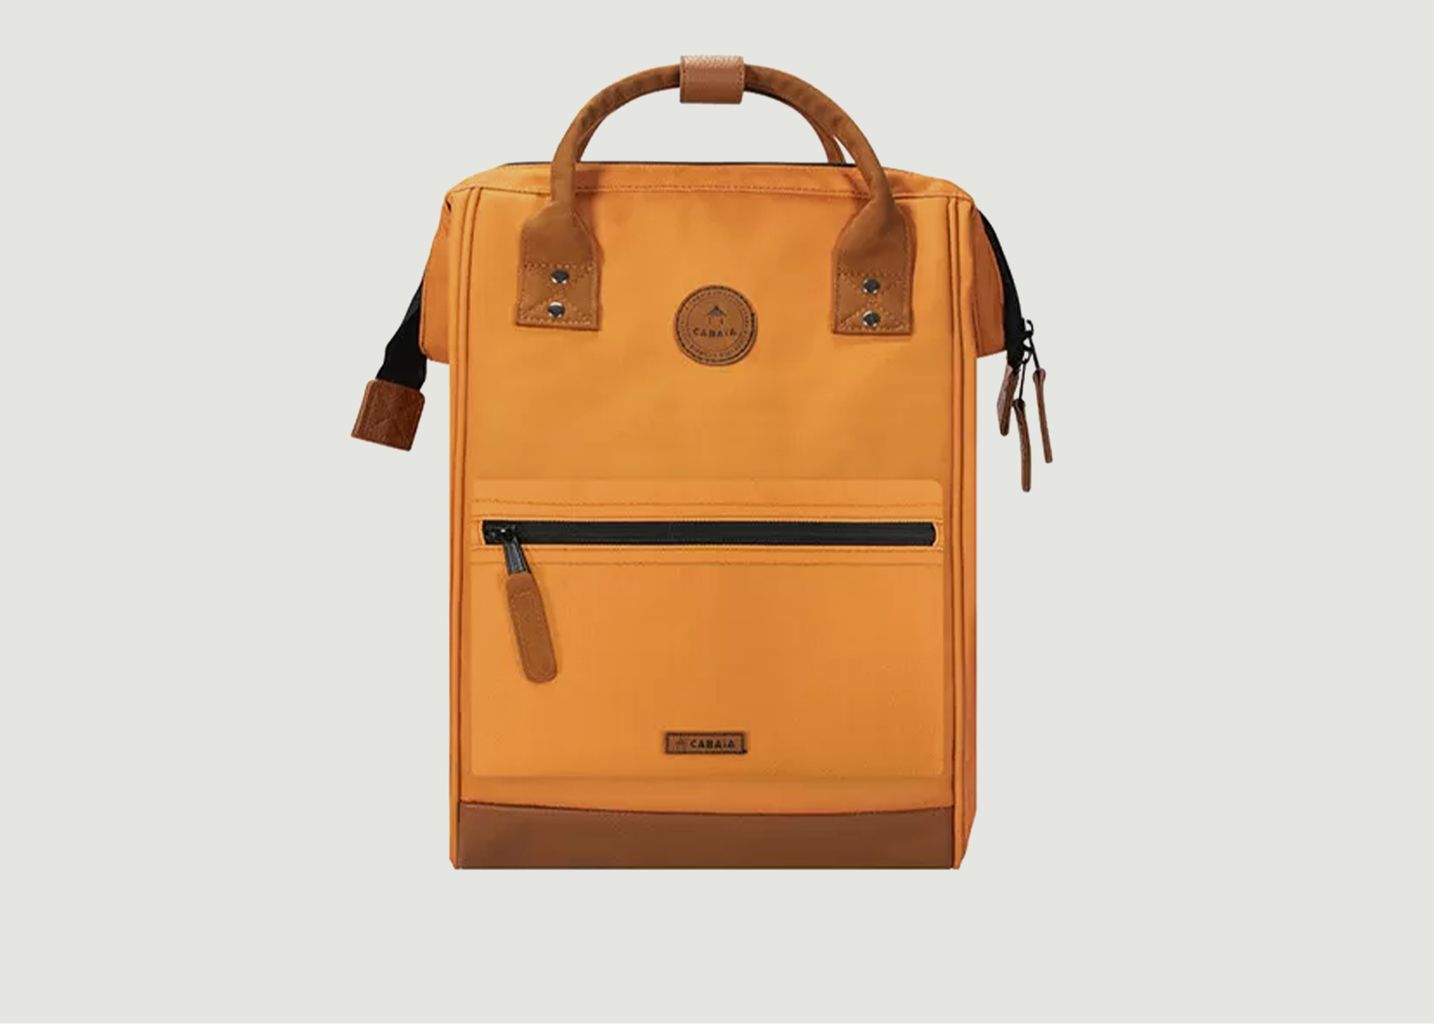 Medium Adventurer Lyon backpack - Cabaïa